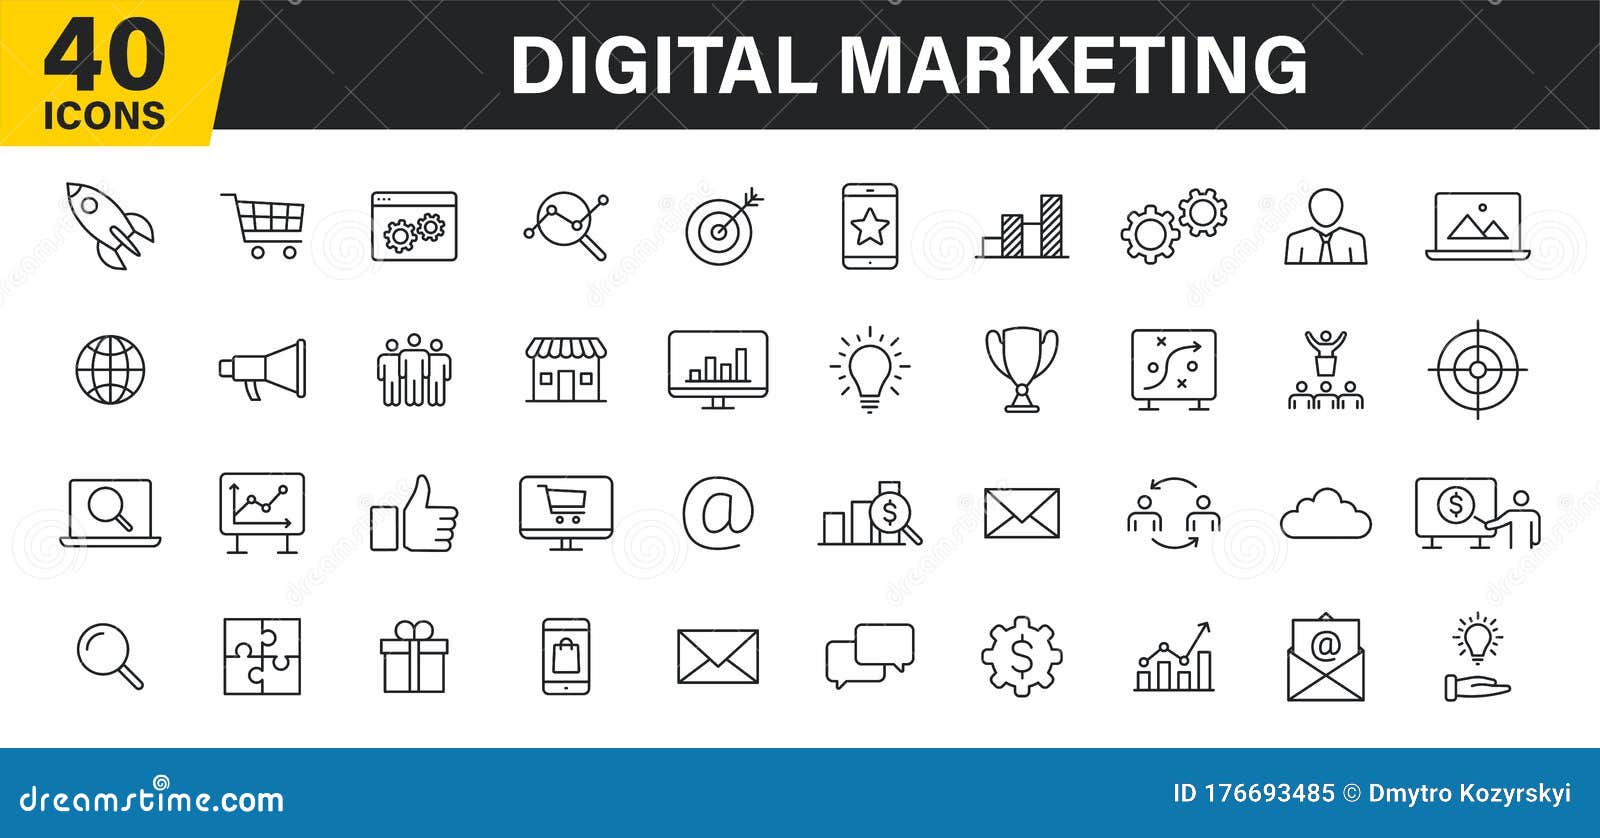 set of 40 digital marketing web icons in line style. social, networks, feedback, communication, marketing, ecommerce. 